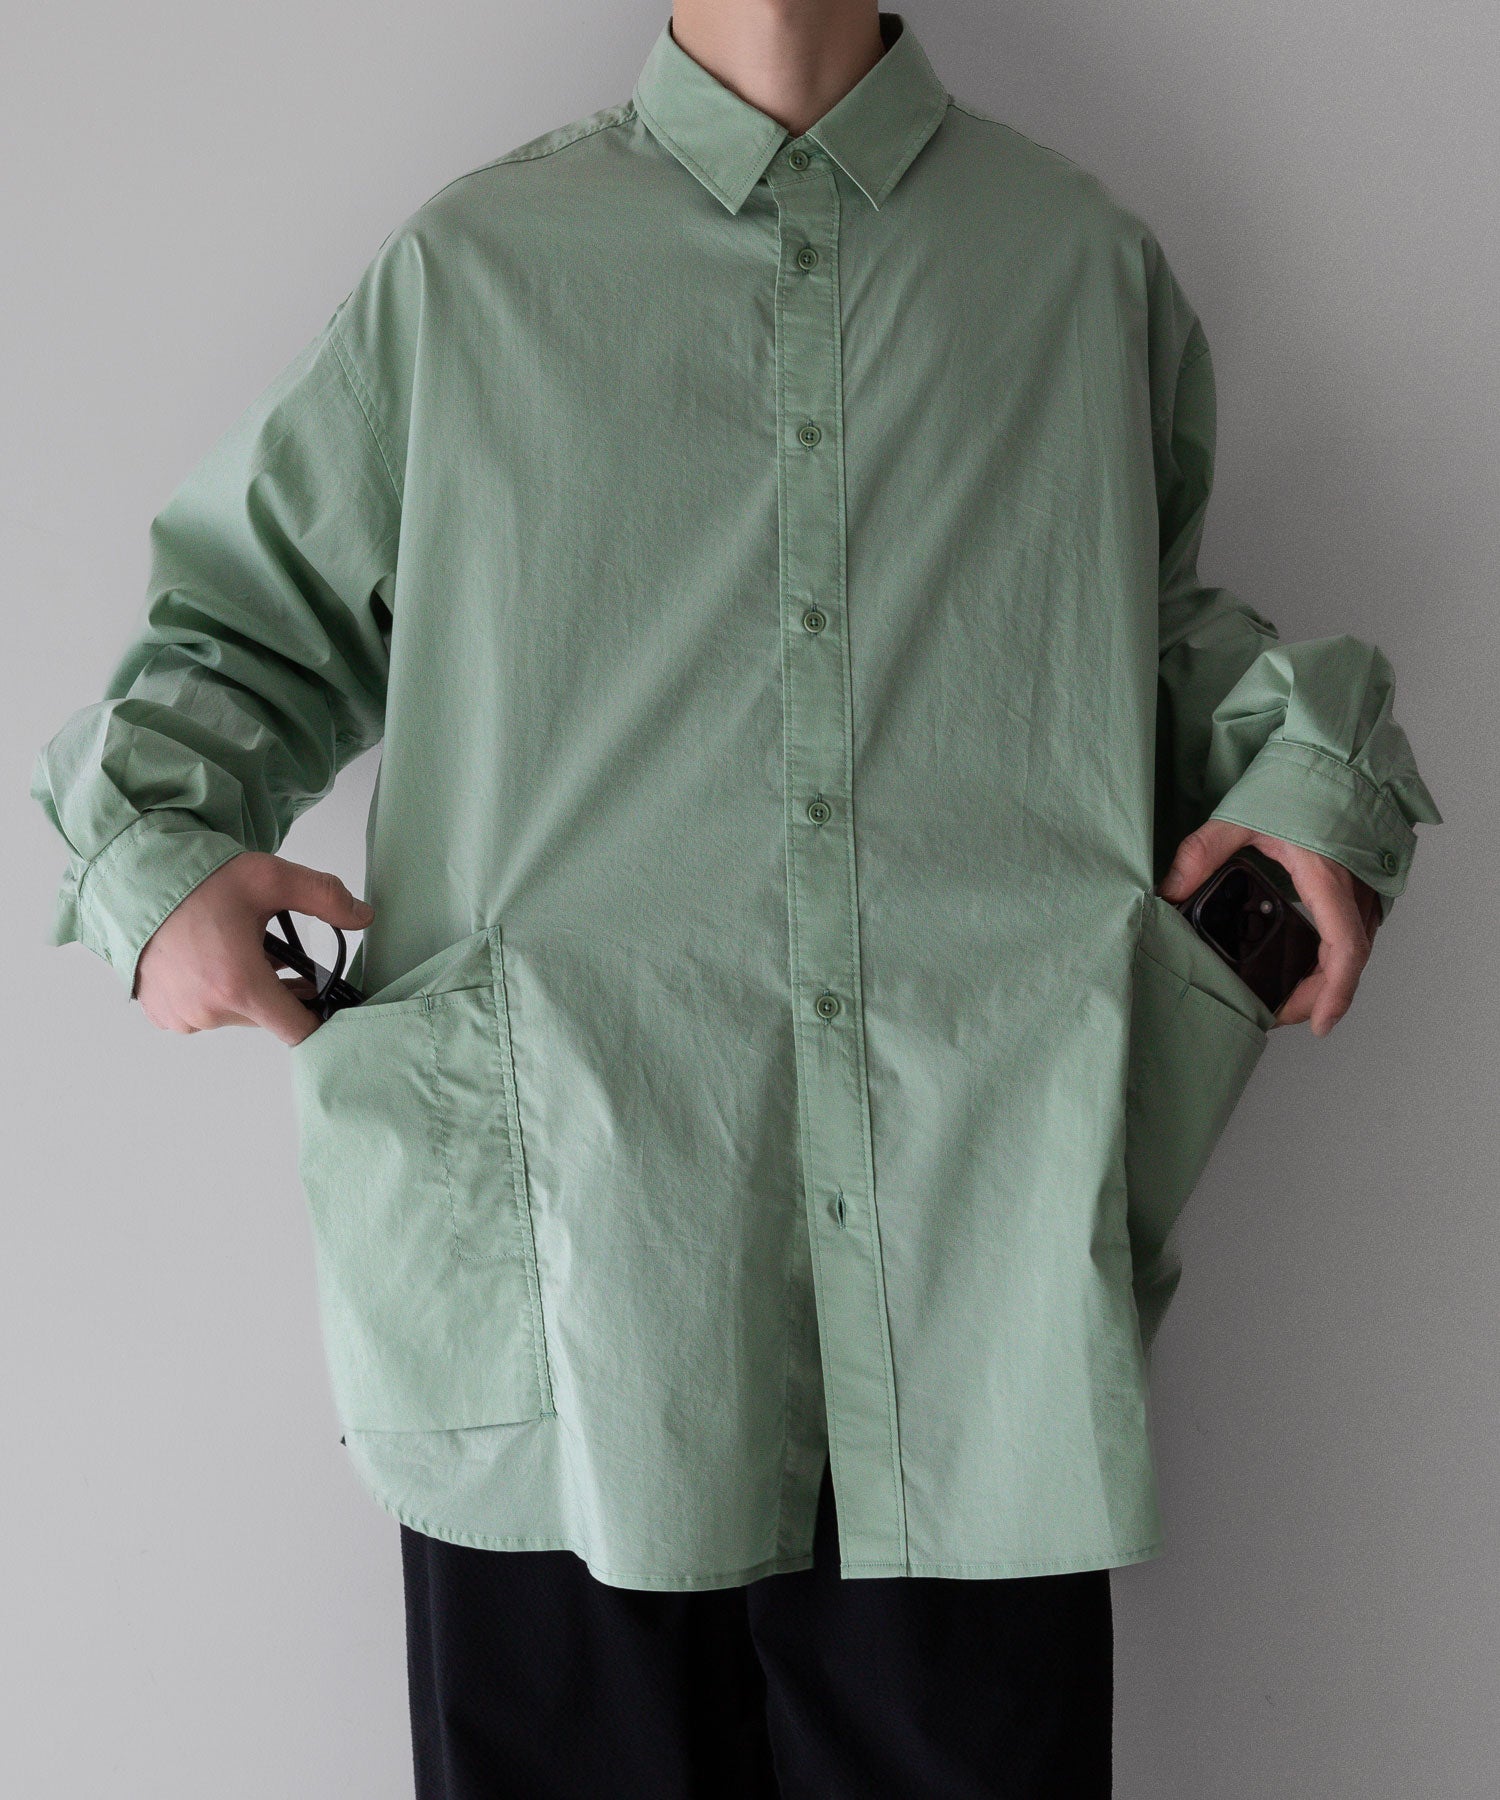 【NEITHERS】ネイダースのSleepwalker Apron L/S Shirt - LIGHT GREEN公式通販サイトsession福岡セレクトショップ